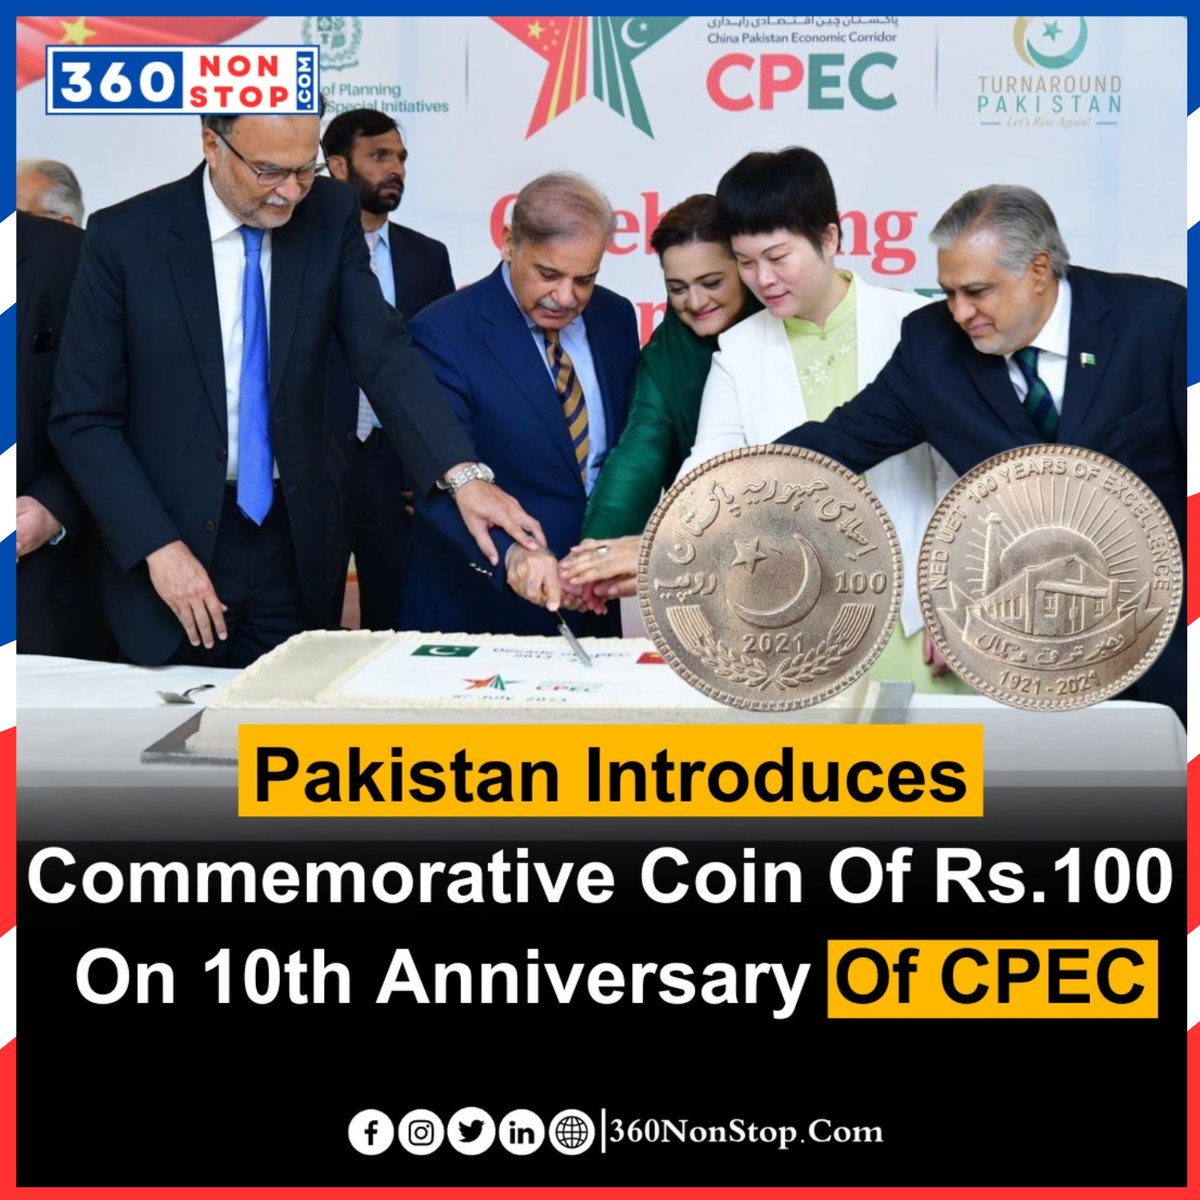 Pakistan Introduces Commemorative Coin Of Rs.100 On 10th Anniversary Of CPEC.
#CPECAnniversary #CommemorativeCoin #CPEC10Years #CPECDevelopment #CPECmilestone #CPECProgress #PakistanEconomy #ChinaPakistanEconomicCorridor #CPECJourney  #360Nonstop